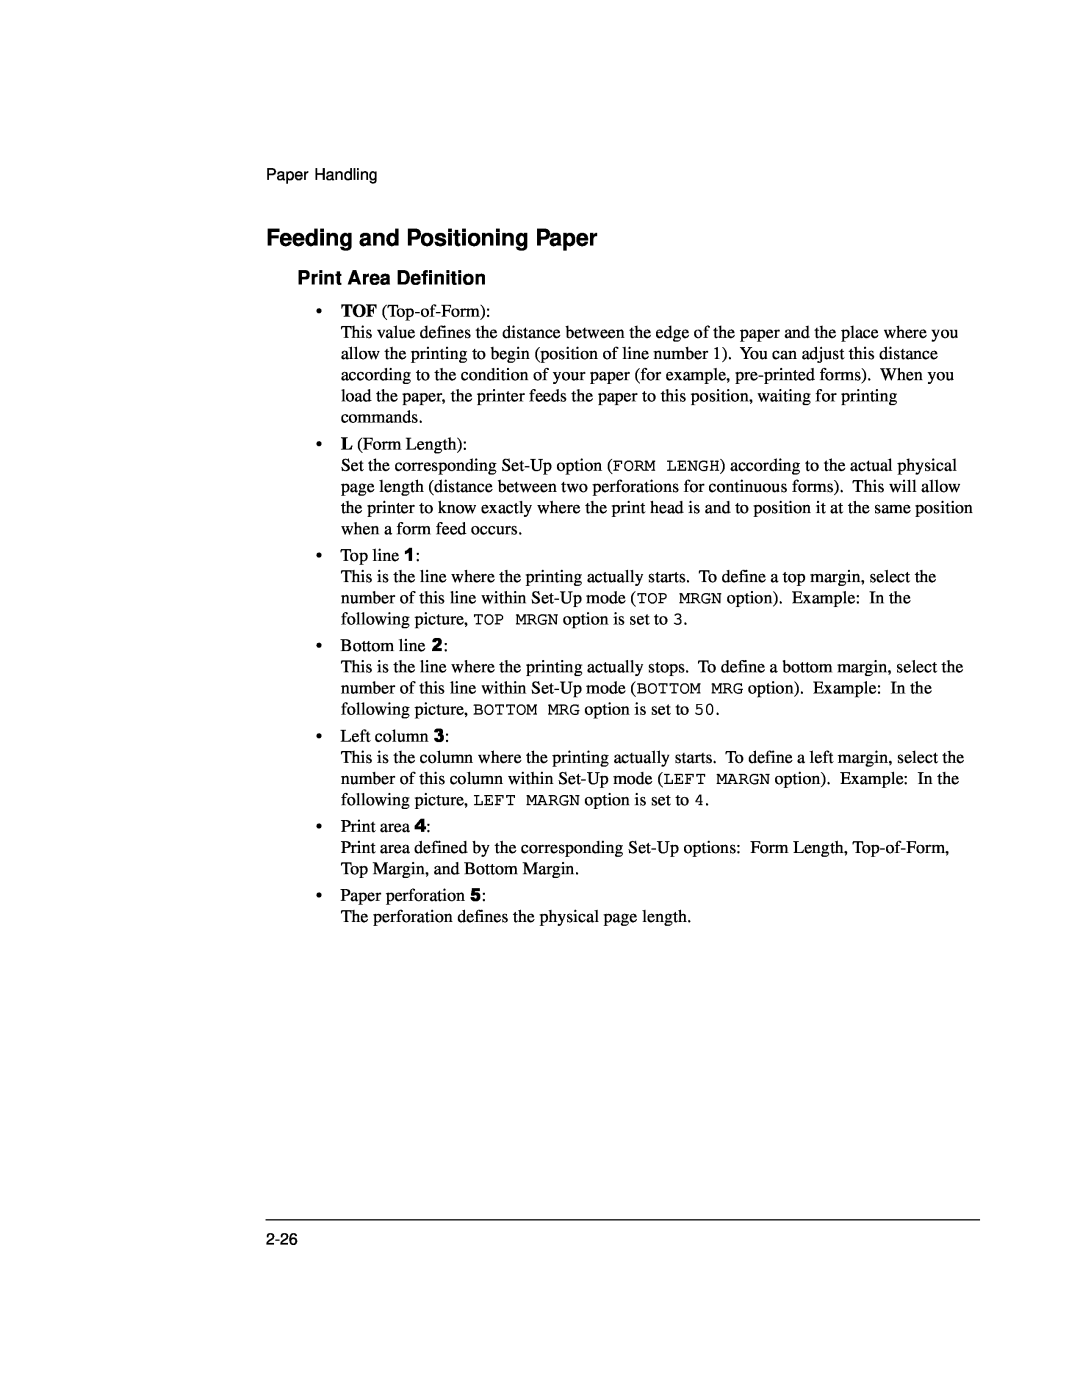 Genicom LA36 manual Feeding and Positioning Paper, Print Area Definition 